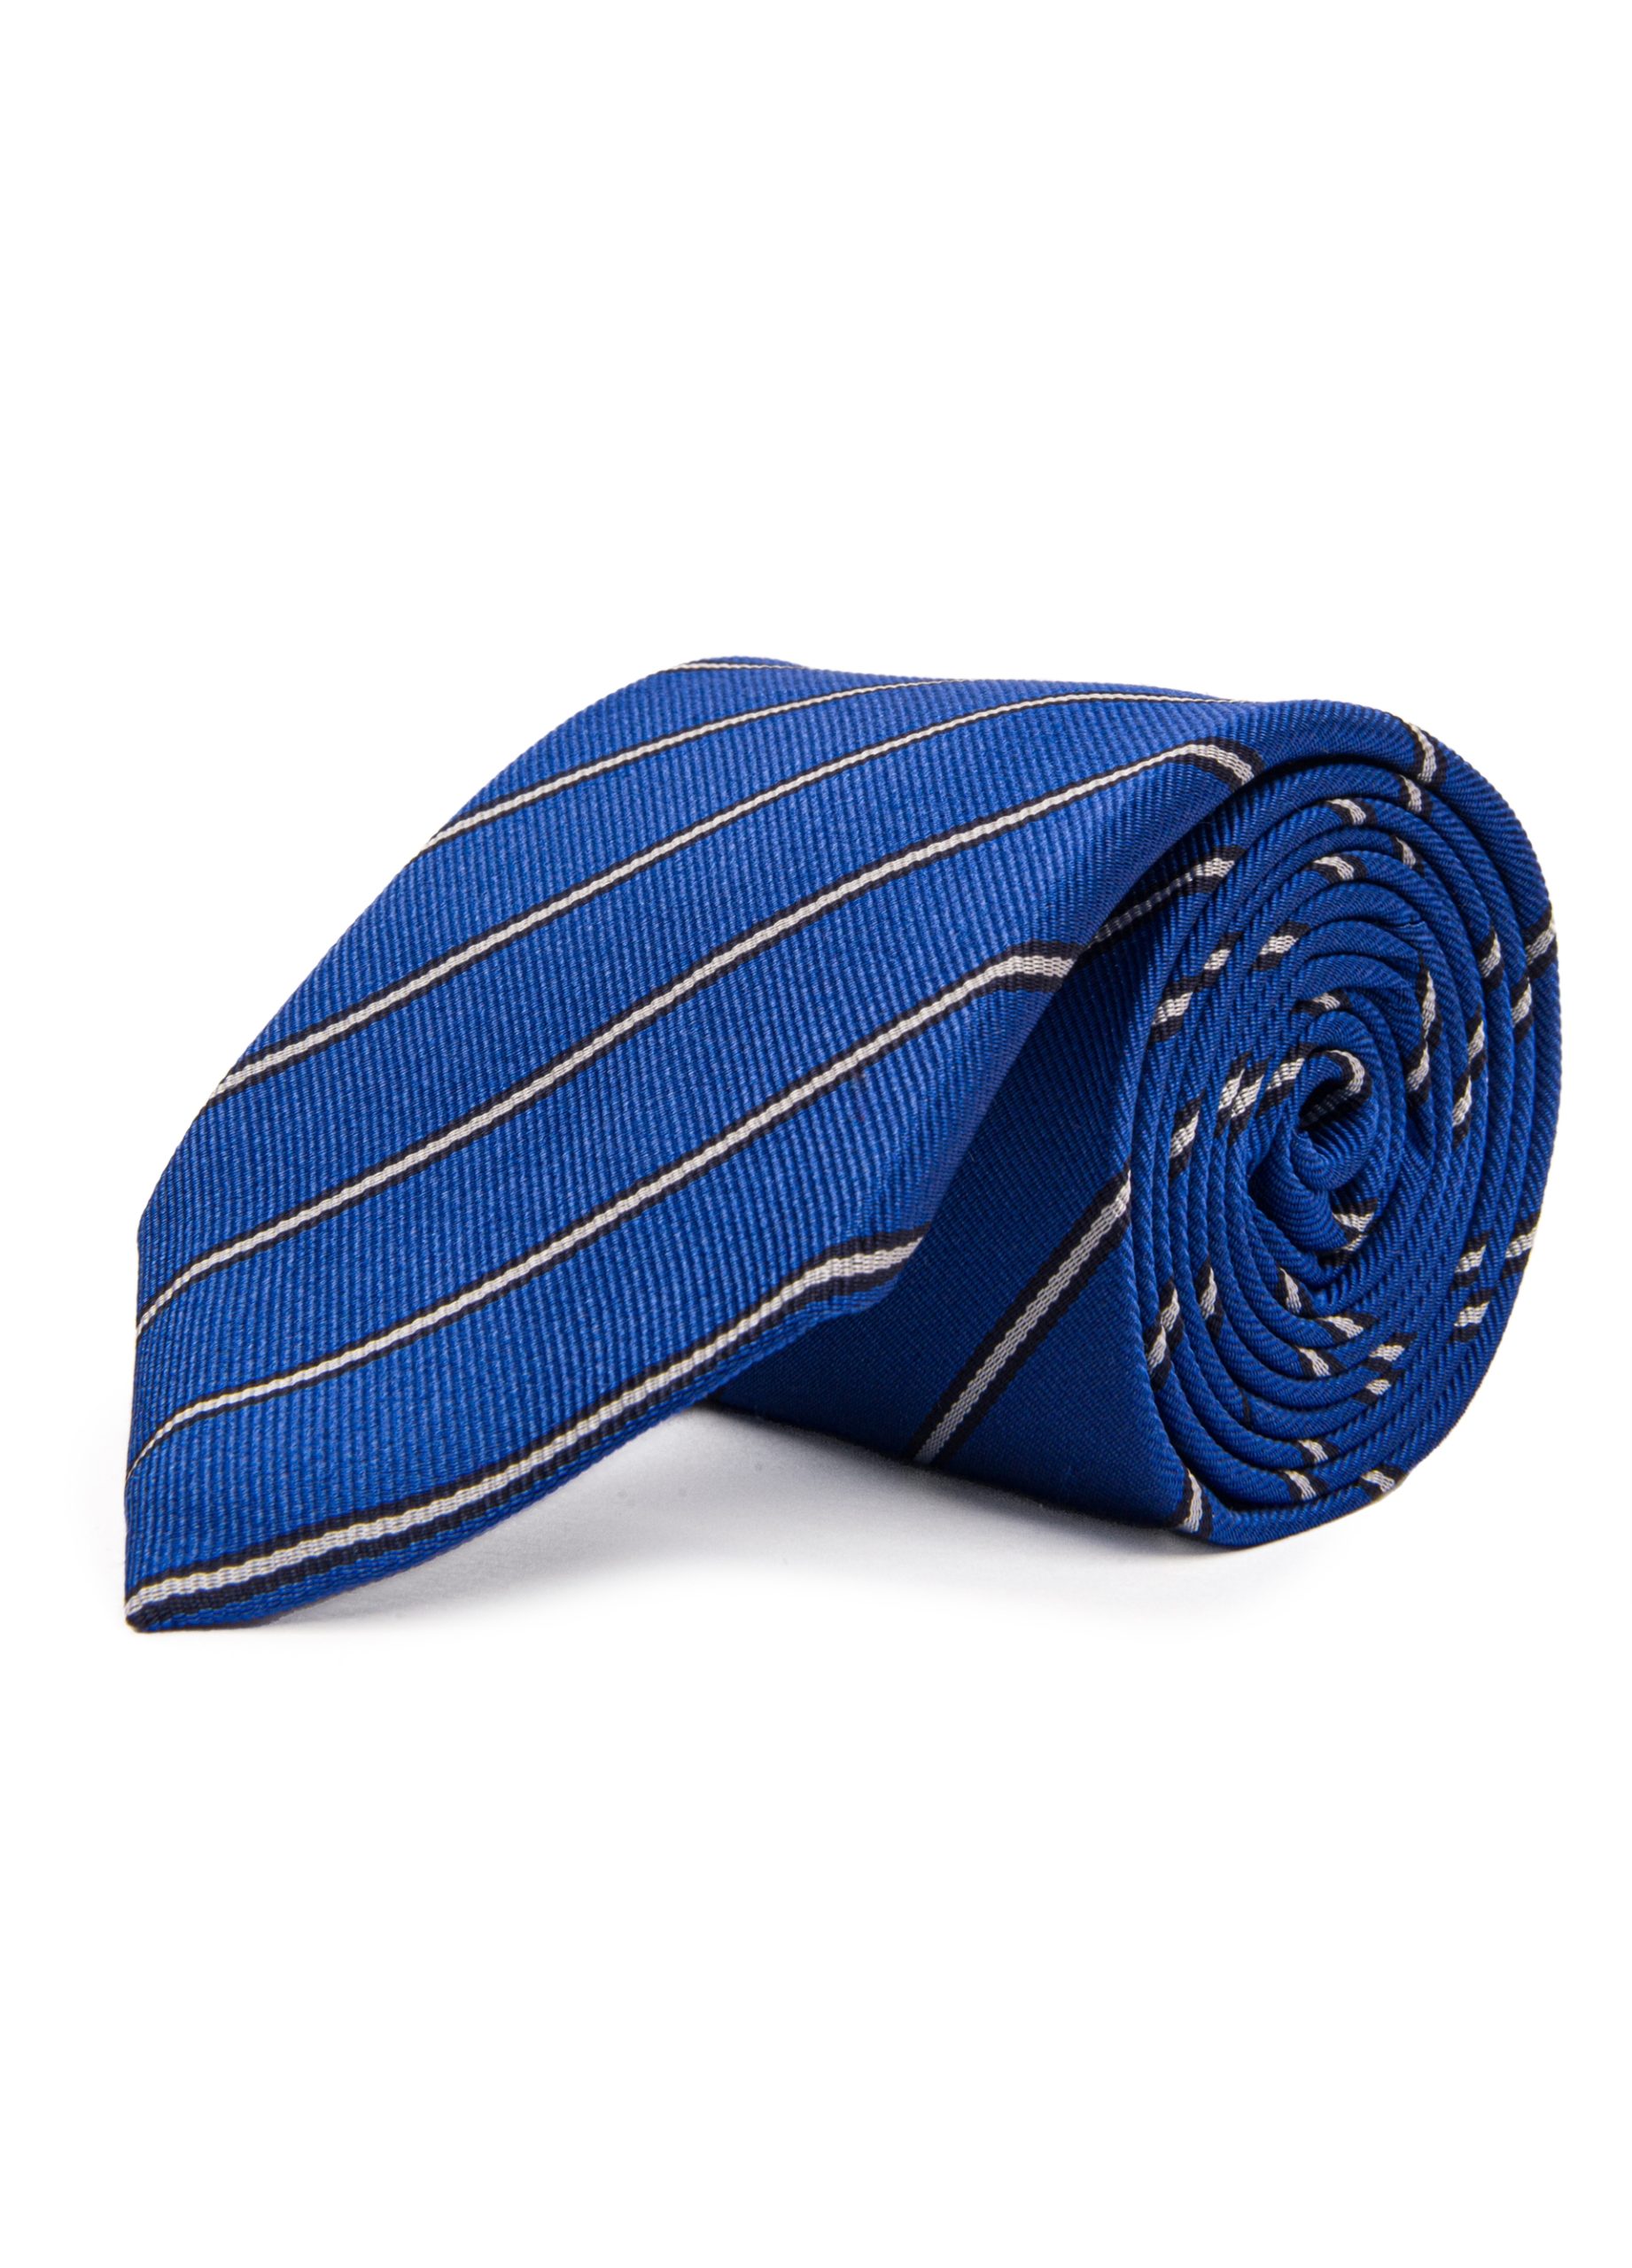 Roderick Charles navy stripe tie